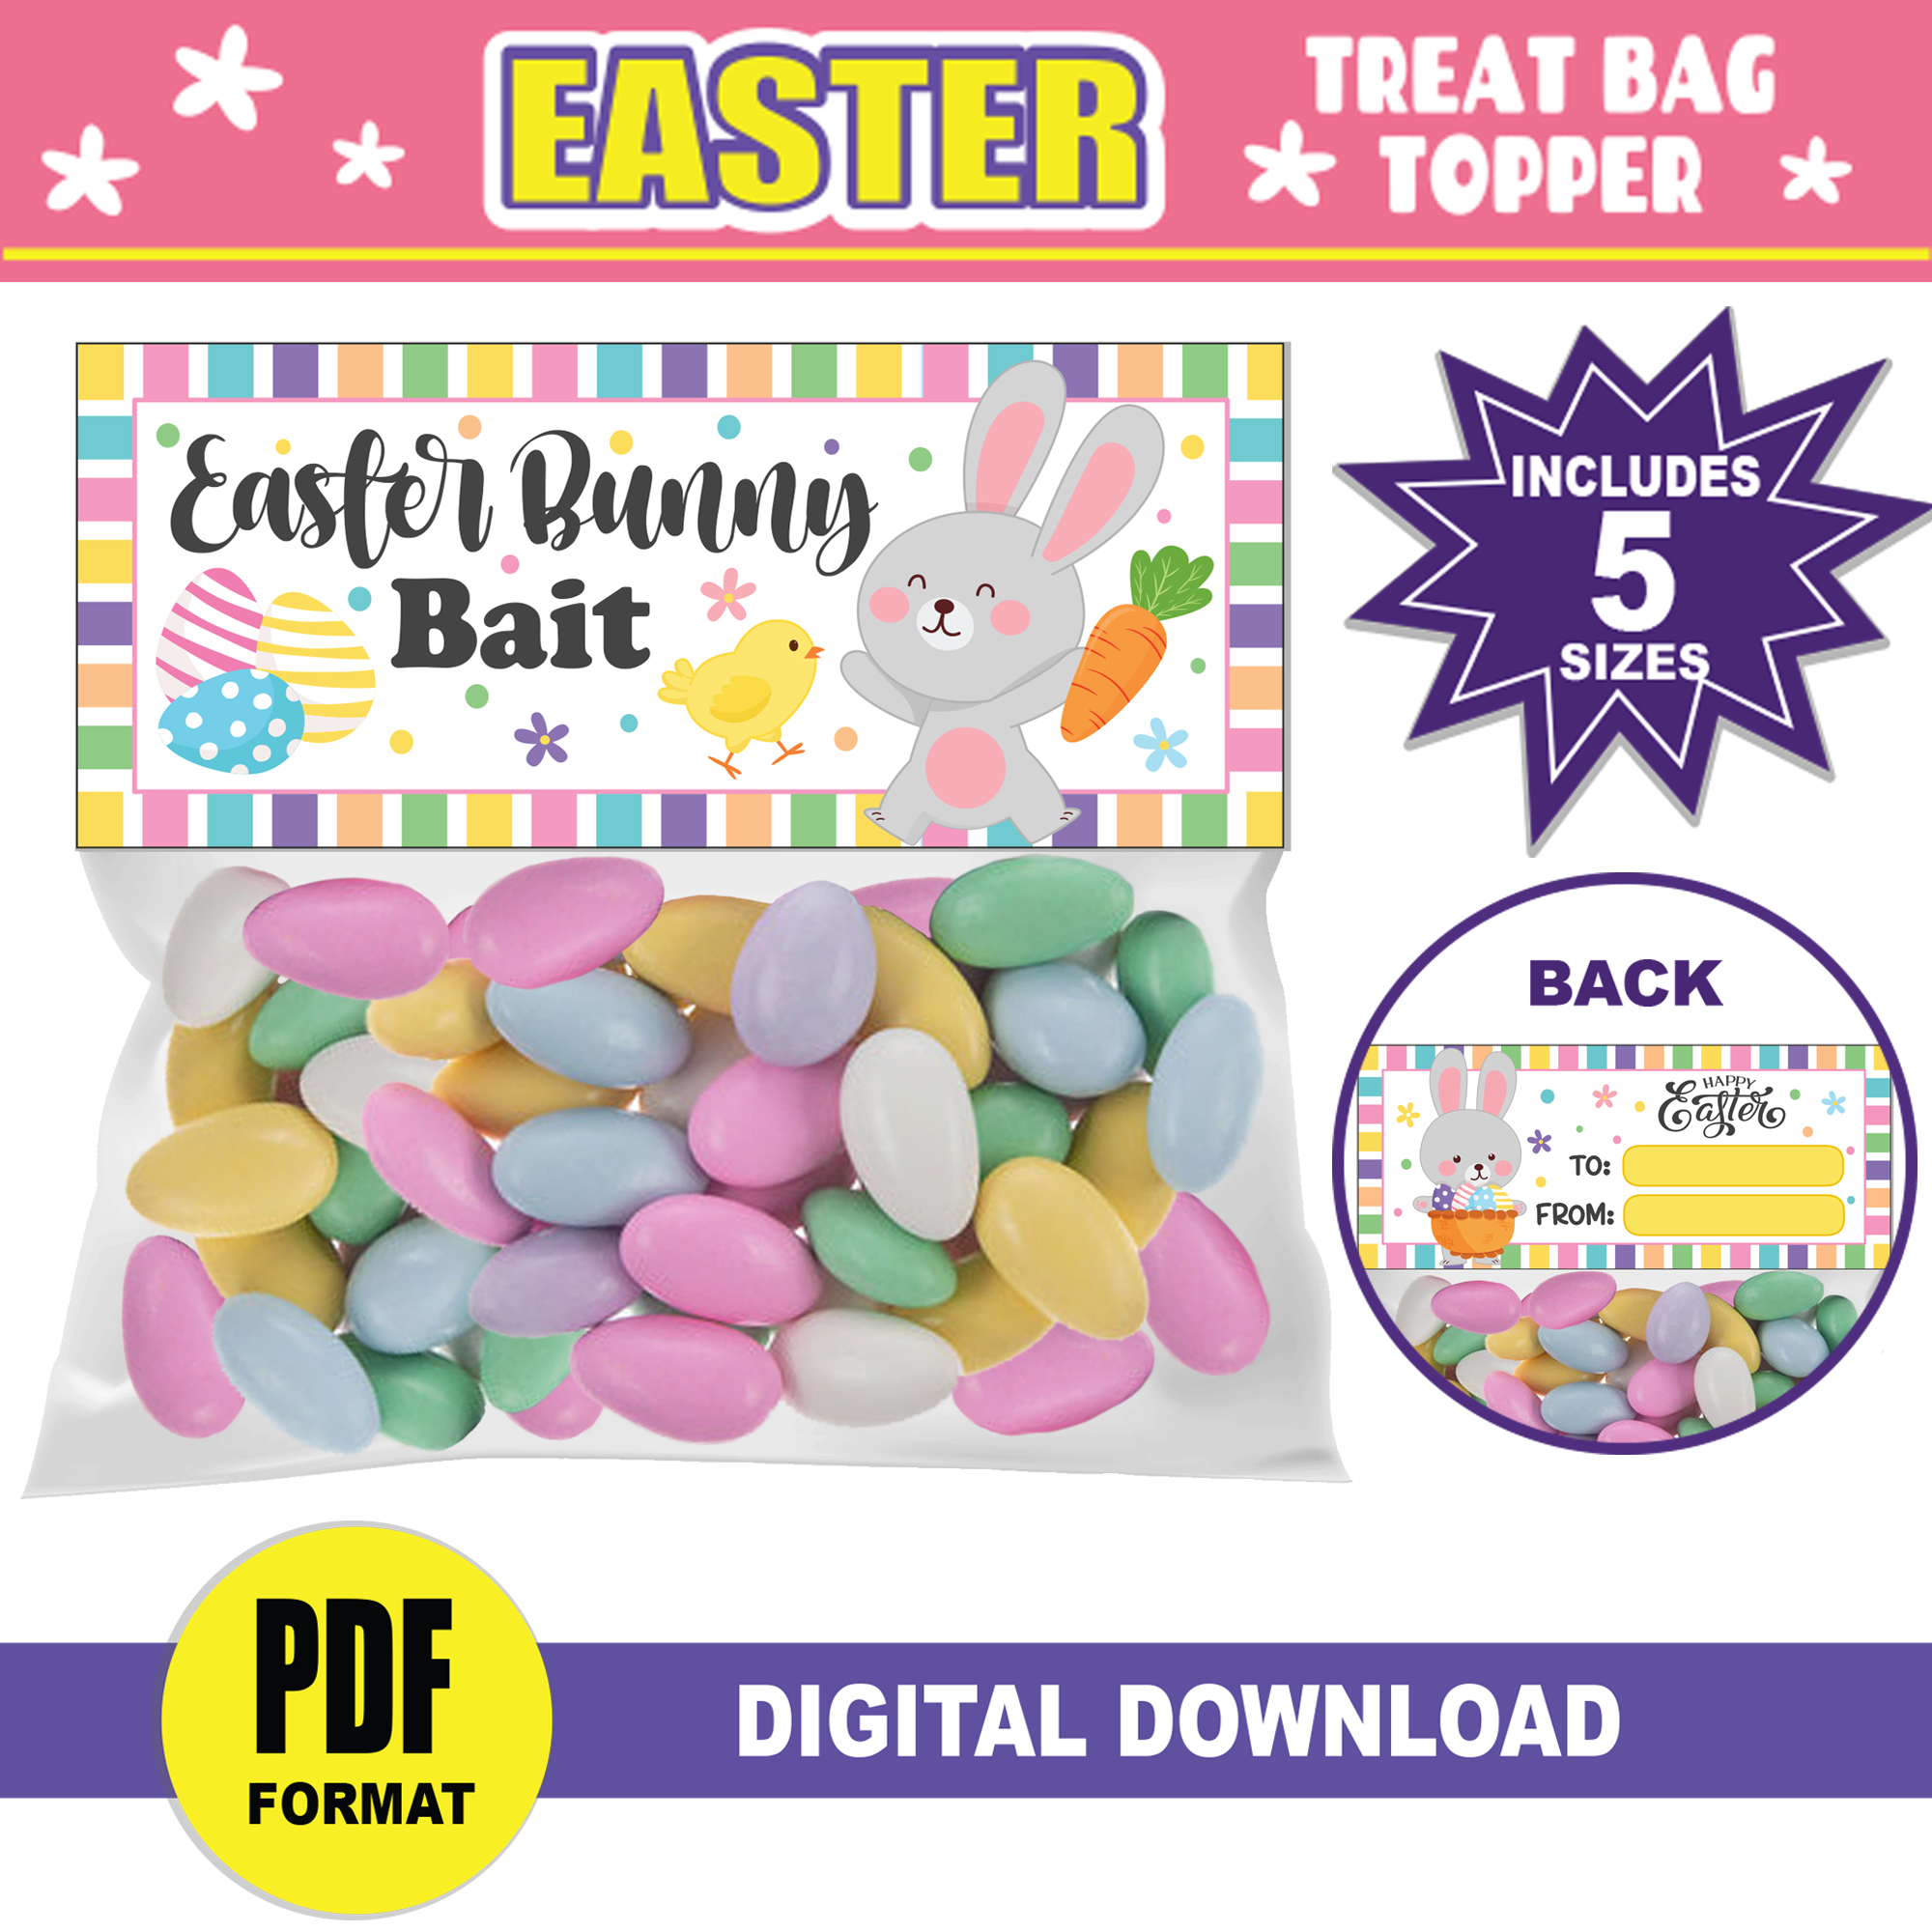 Easter Treat Bag Topper  Easter Bunny Bait Candy Treat Bag Topper